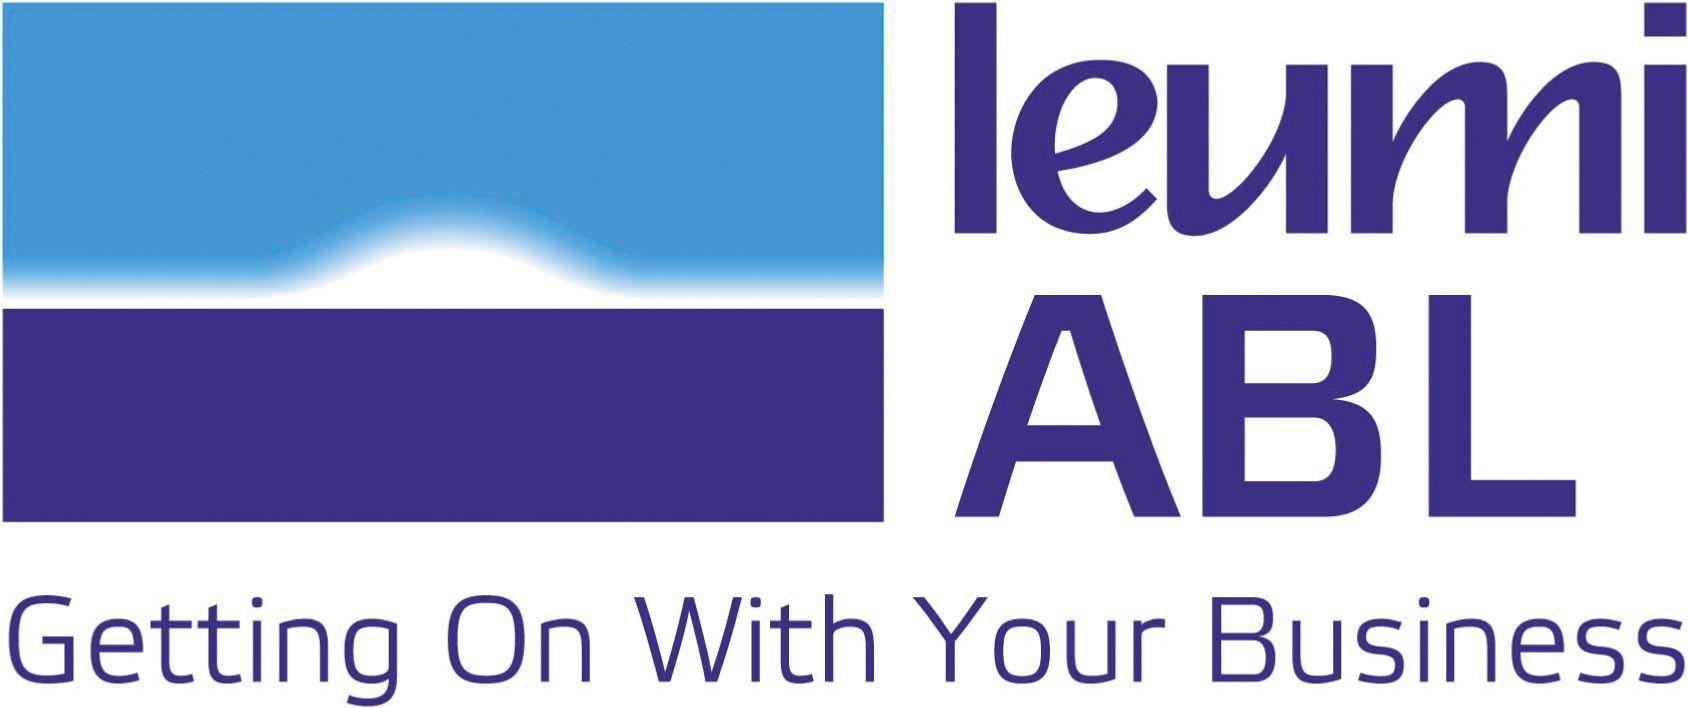 ABL Logo - Leumi ABL Limited, Leeds. Asset Based Finance. Business Directory